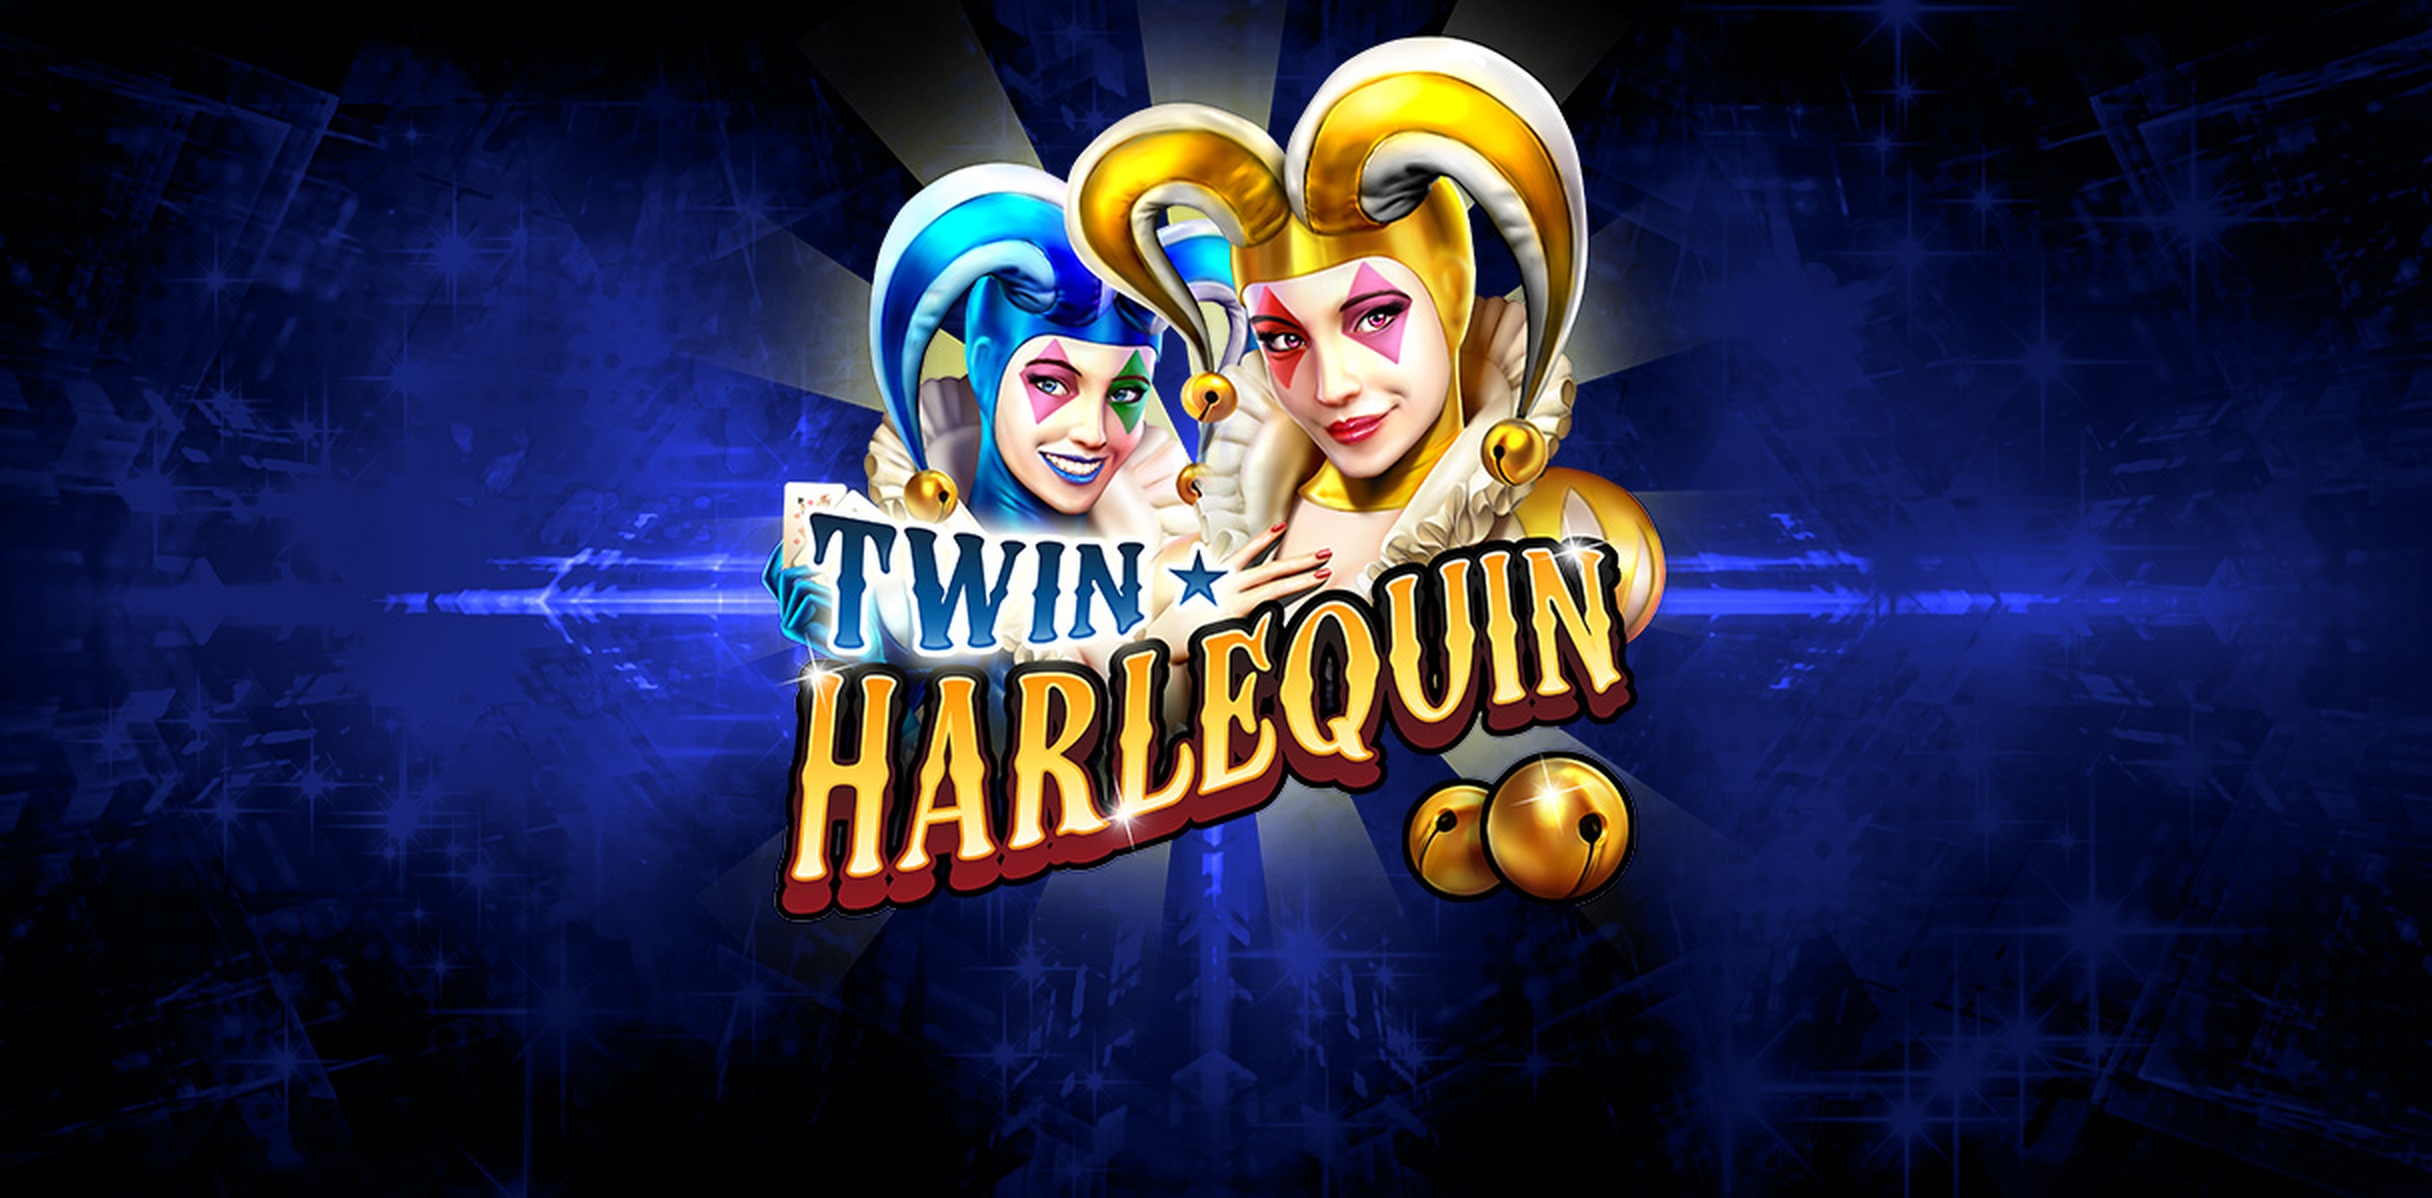 Twin Harlequin demo